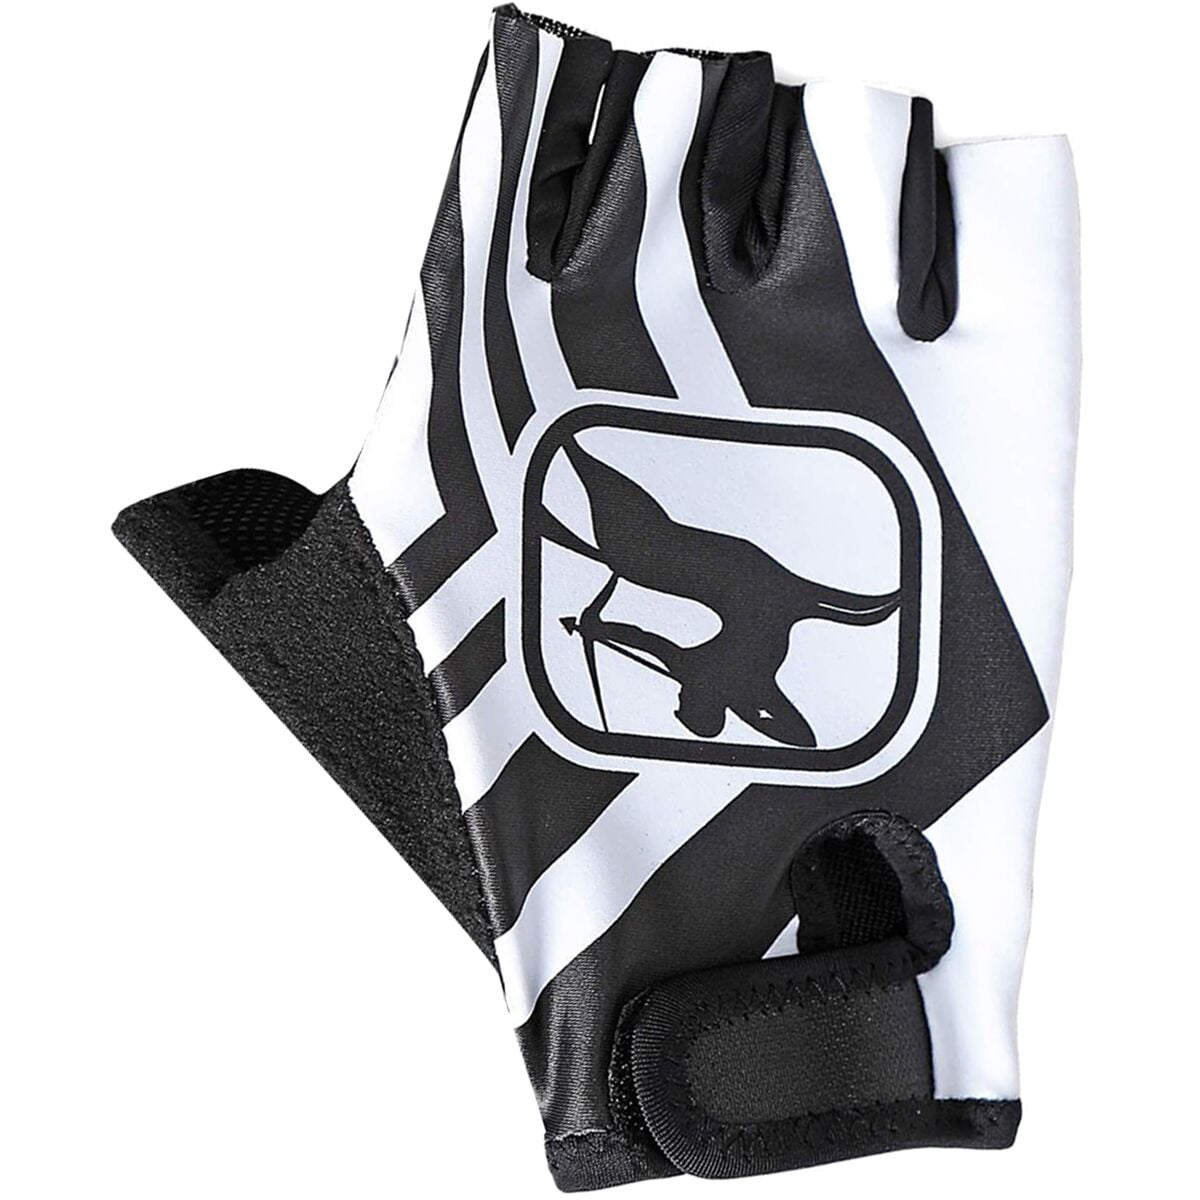 Giordana Tenax Pro Glove Strisce, S - Men's